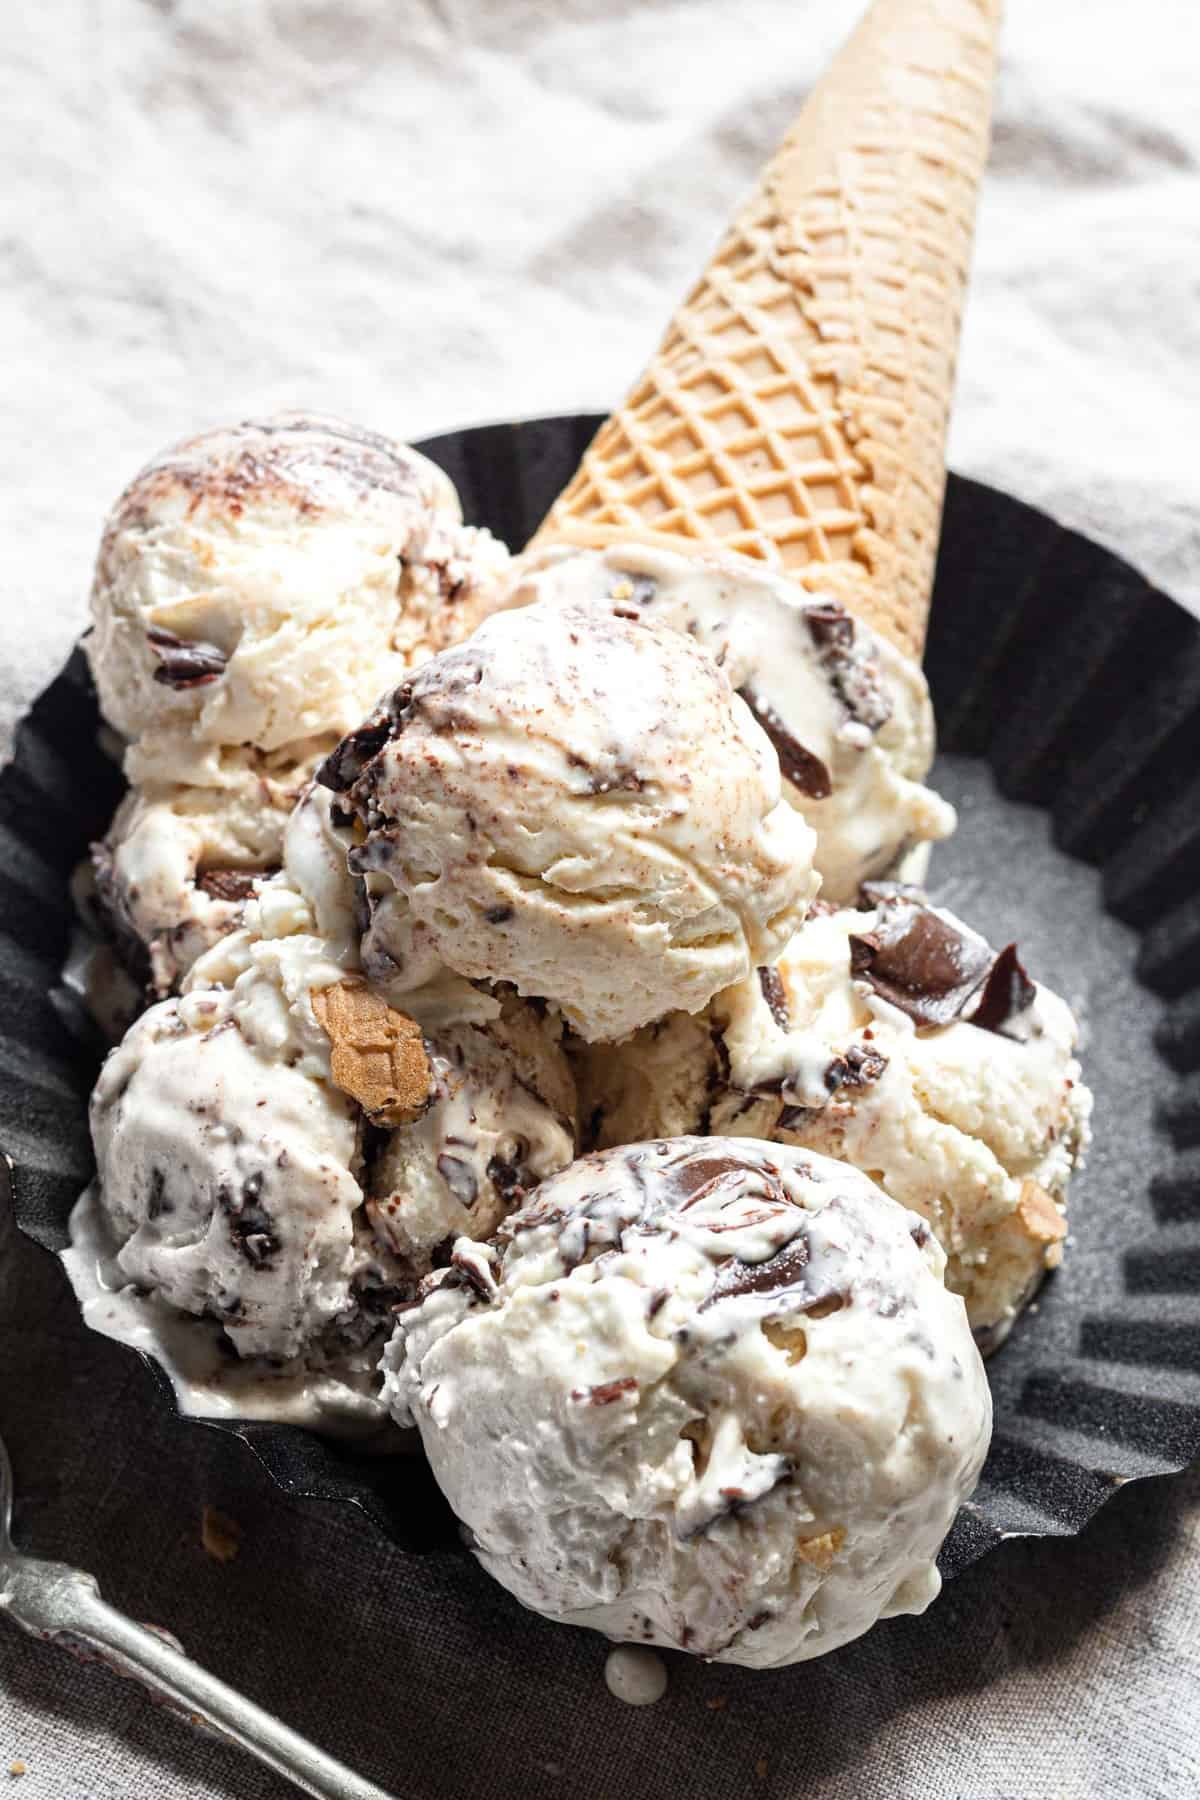 https://www.onesarcasticbaker.com/wp-content/uploads/2020/06/Tahini-chocolate-ice-cream-process-10.jpg